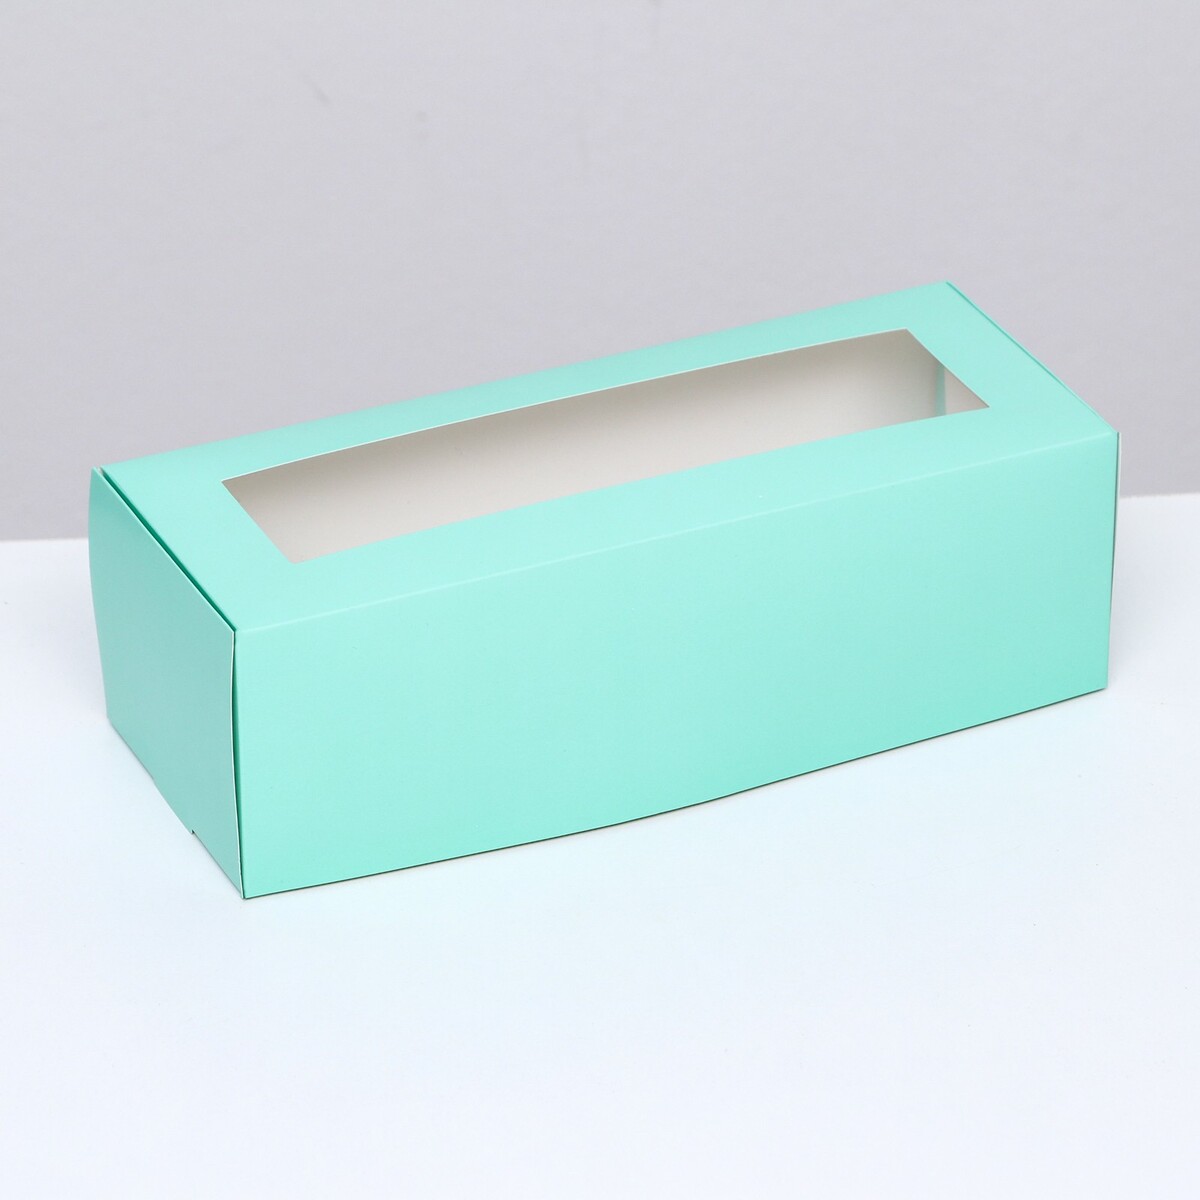 Коробка складная с окном под рулет, зеленая, 26 х 10 х 8 см коробка складная с окном под рулет голубая 26 х 10 х 8 см